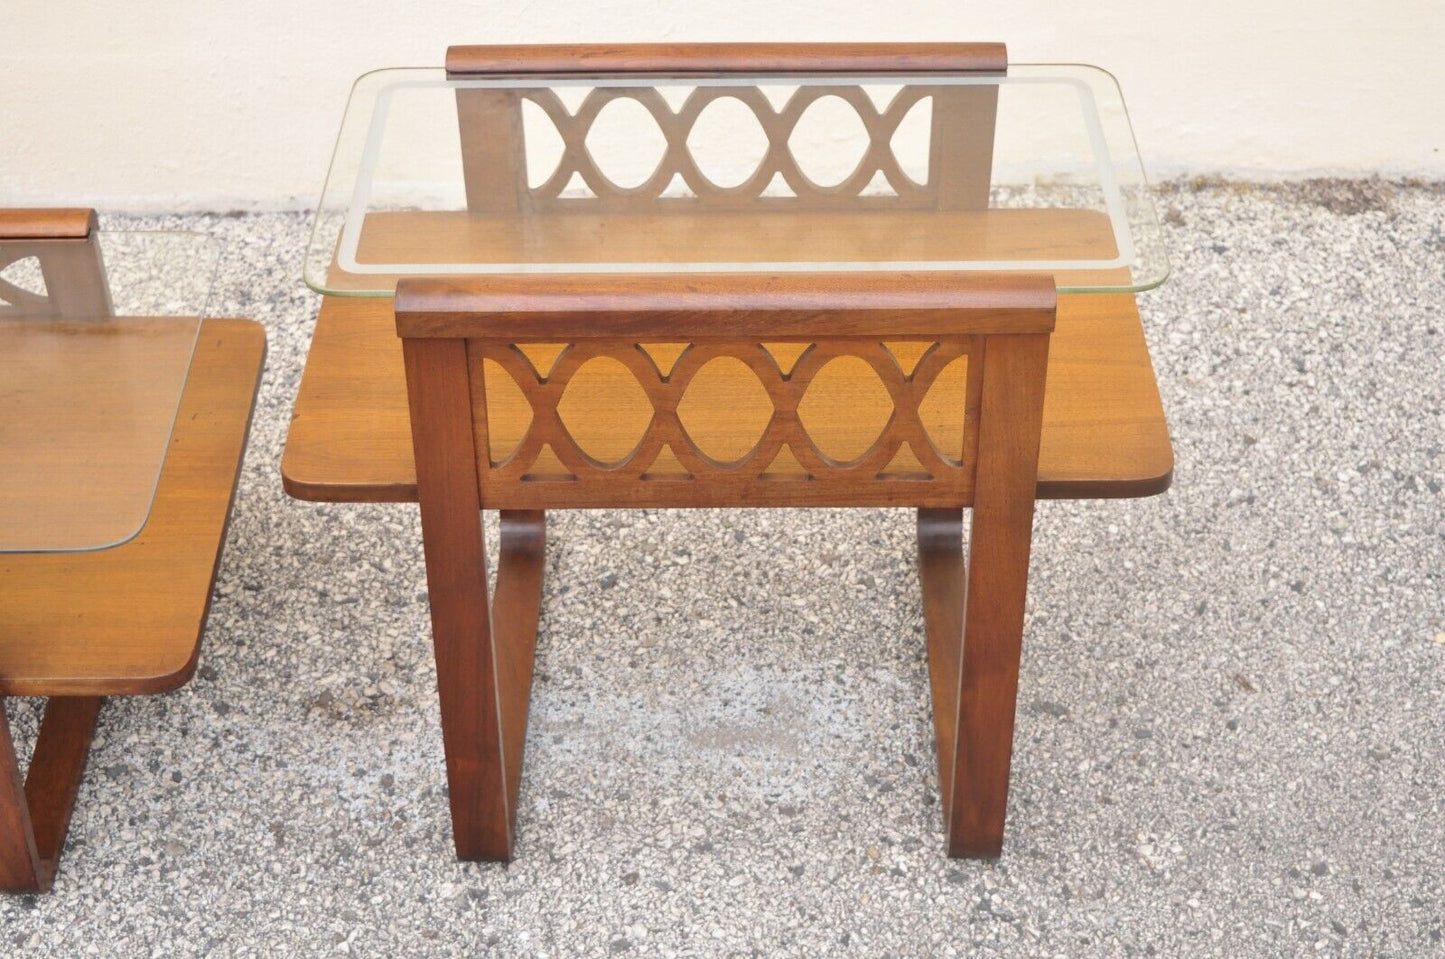 Vintage Art Deco Mid Century Mahogany & Glass Coffee Table Set by Superior 3 Pc